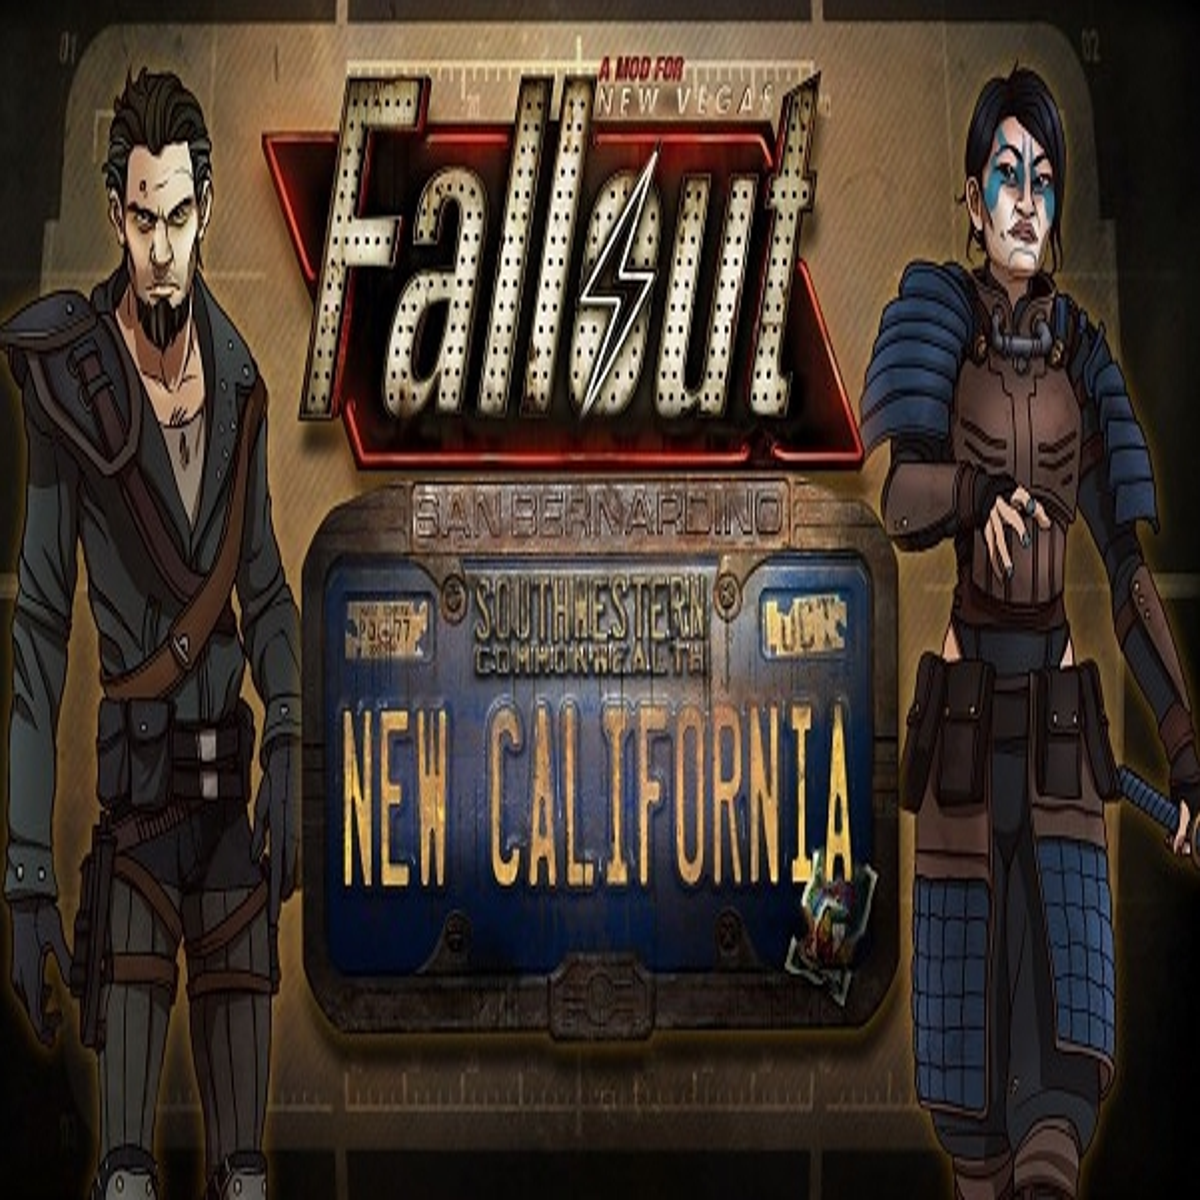 FALLOUT WORLD MAP 2260 image - Fallout: New California mod for Fallout: New  Vegas - ModDB